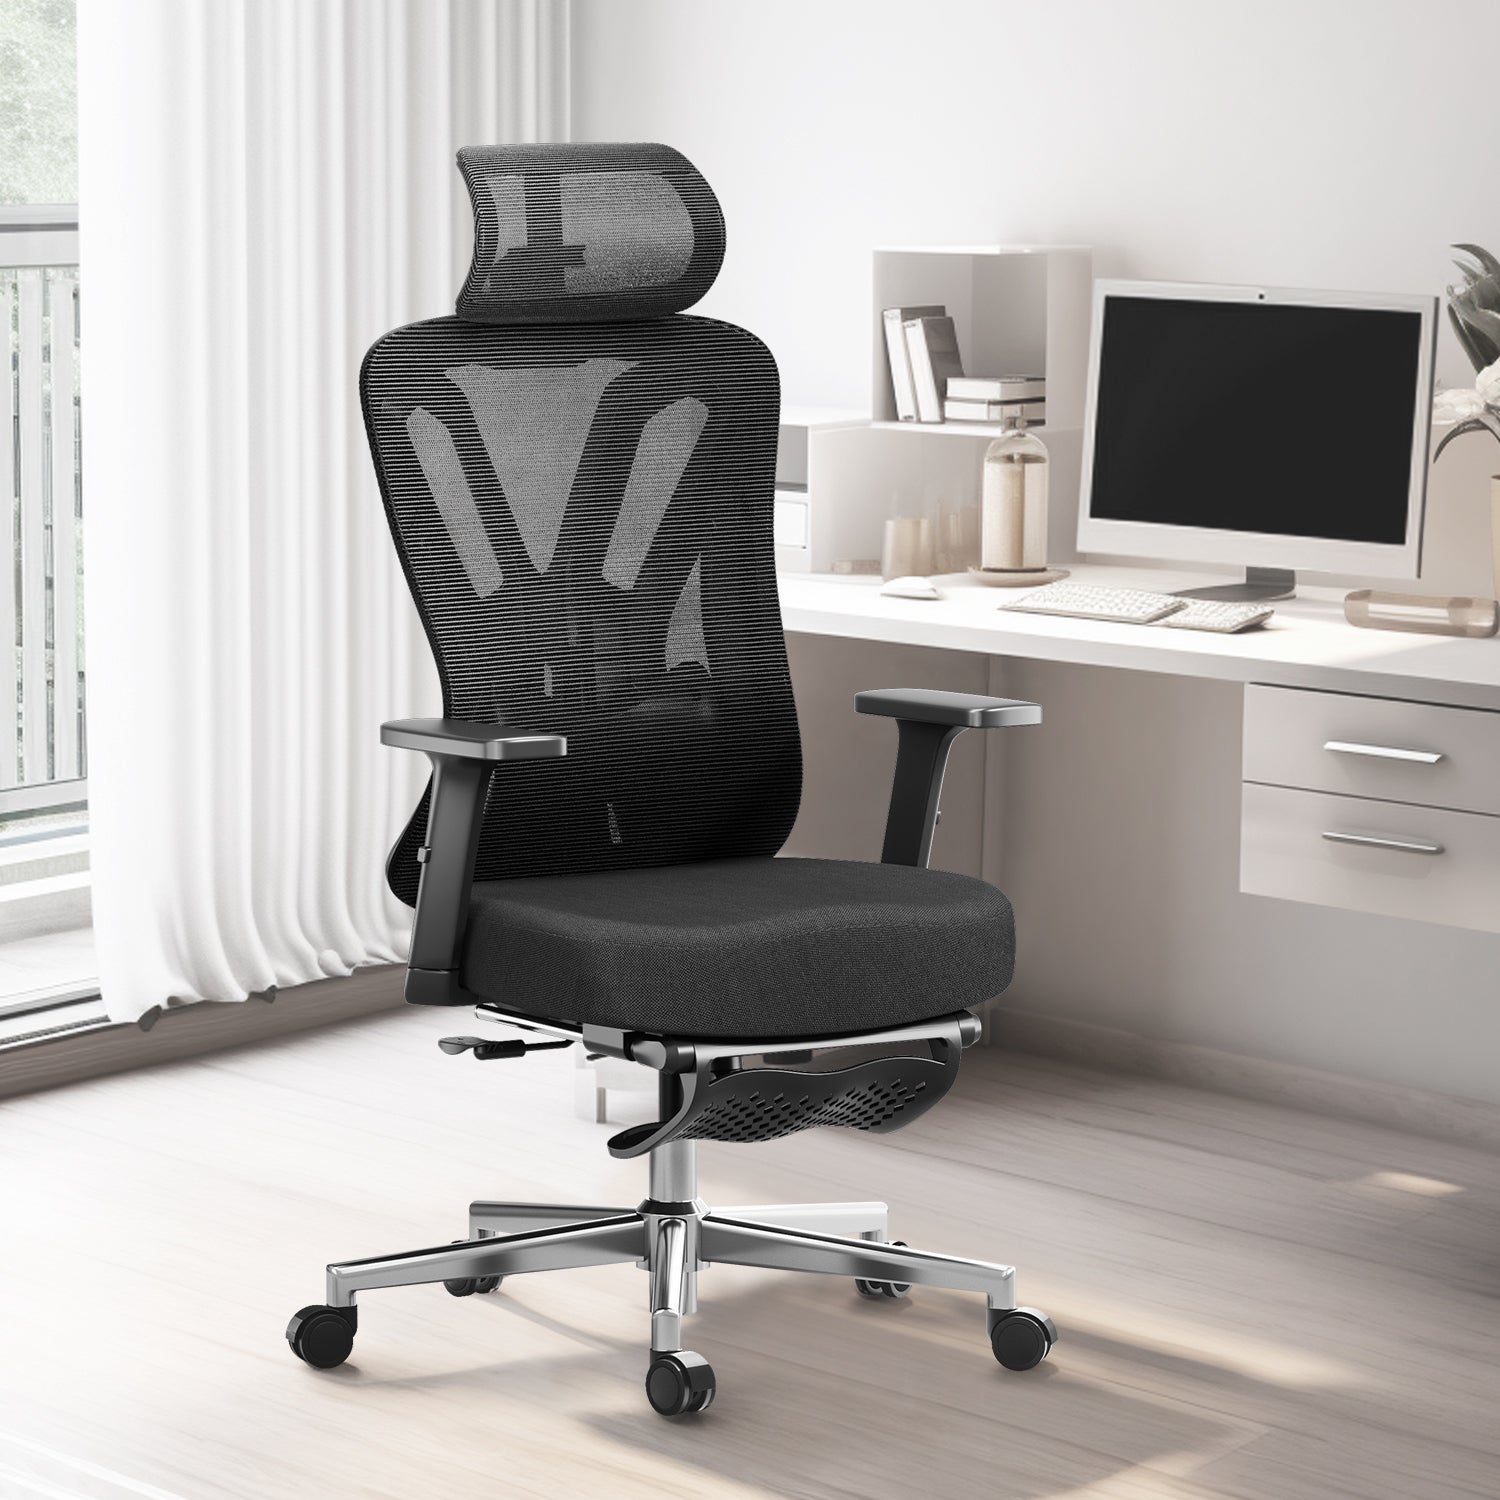 HBADA P5 Ergonomic Office Chair with Footrest